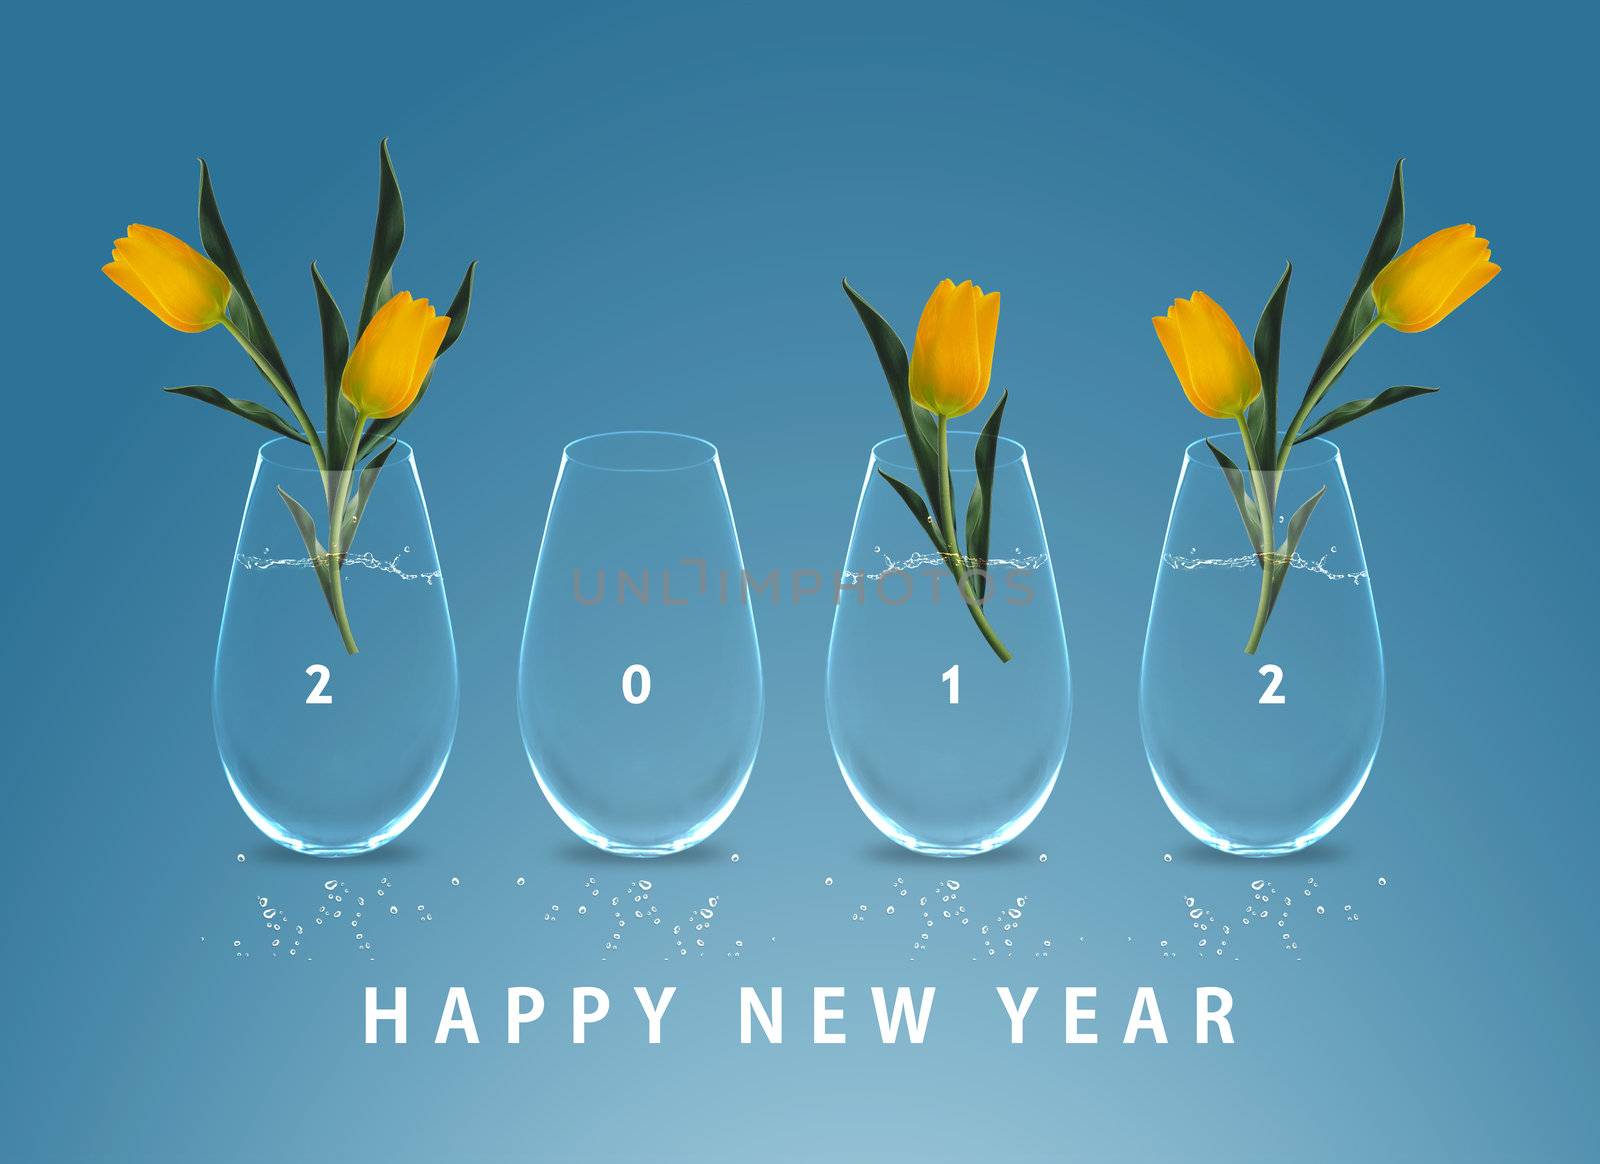 Happy new year 2012 by designsstock